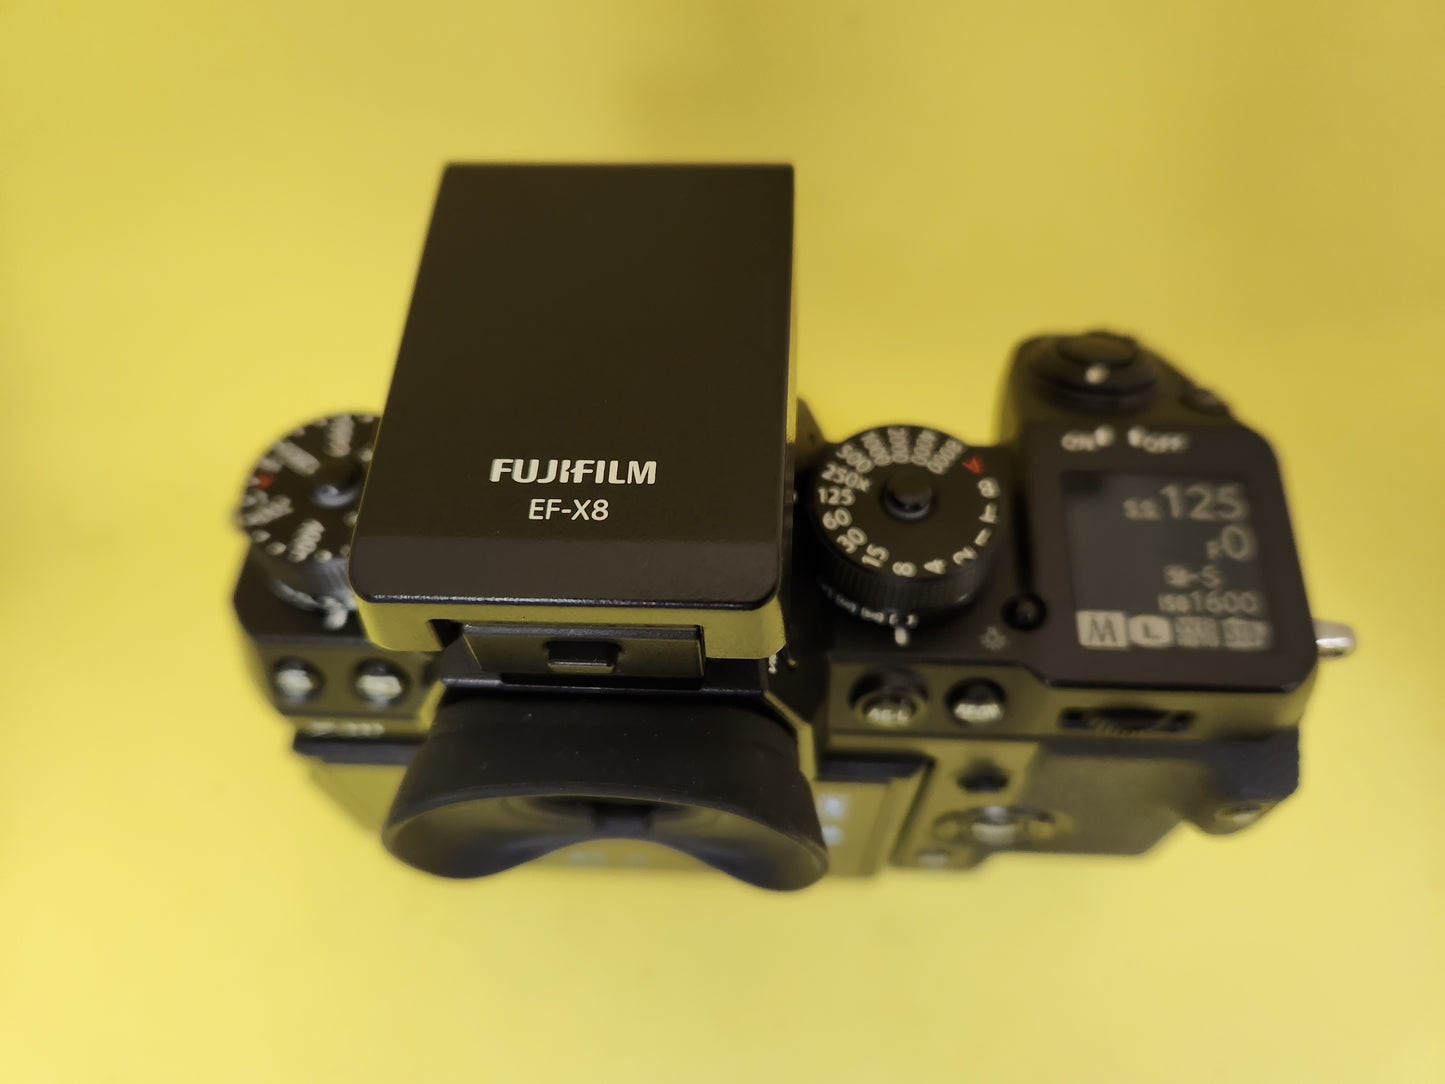 Fujifilm X-H1 body with flash light Fujifilm EF-X8 used